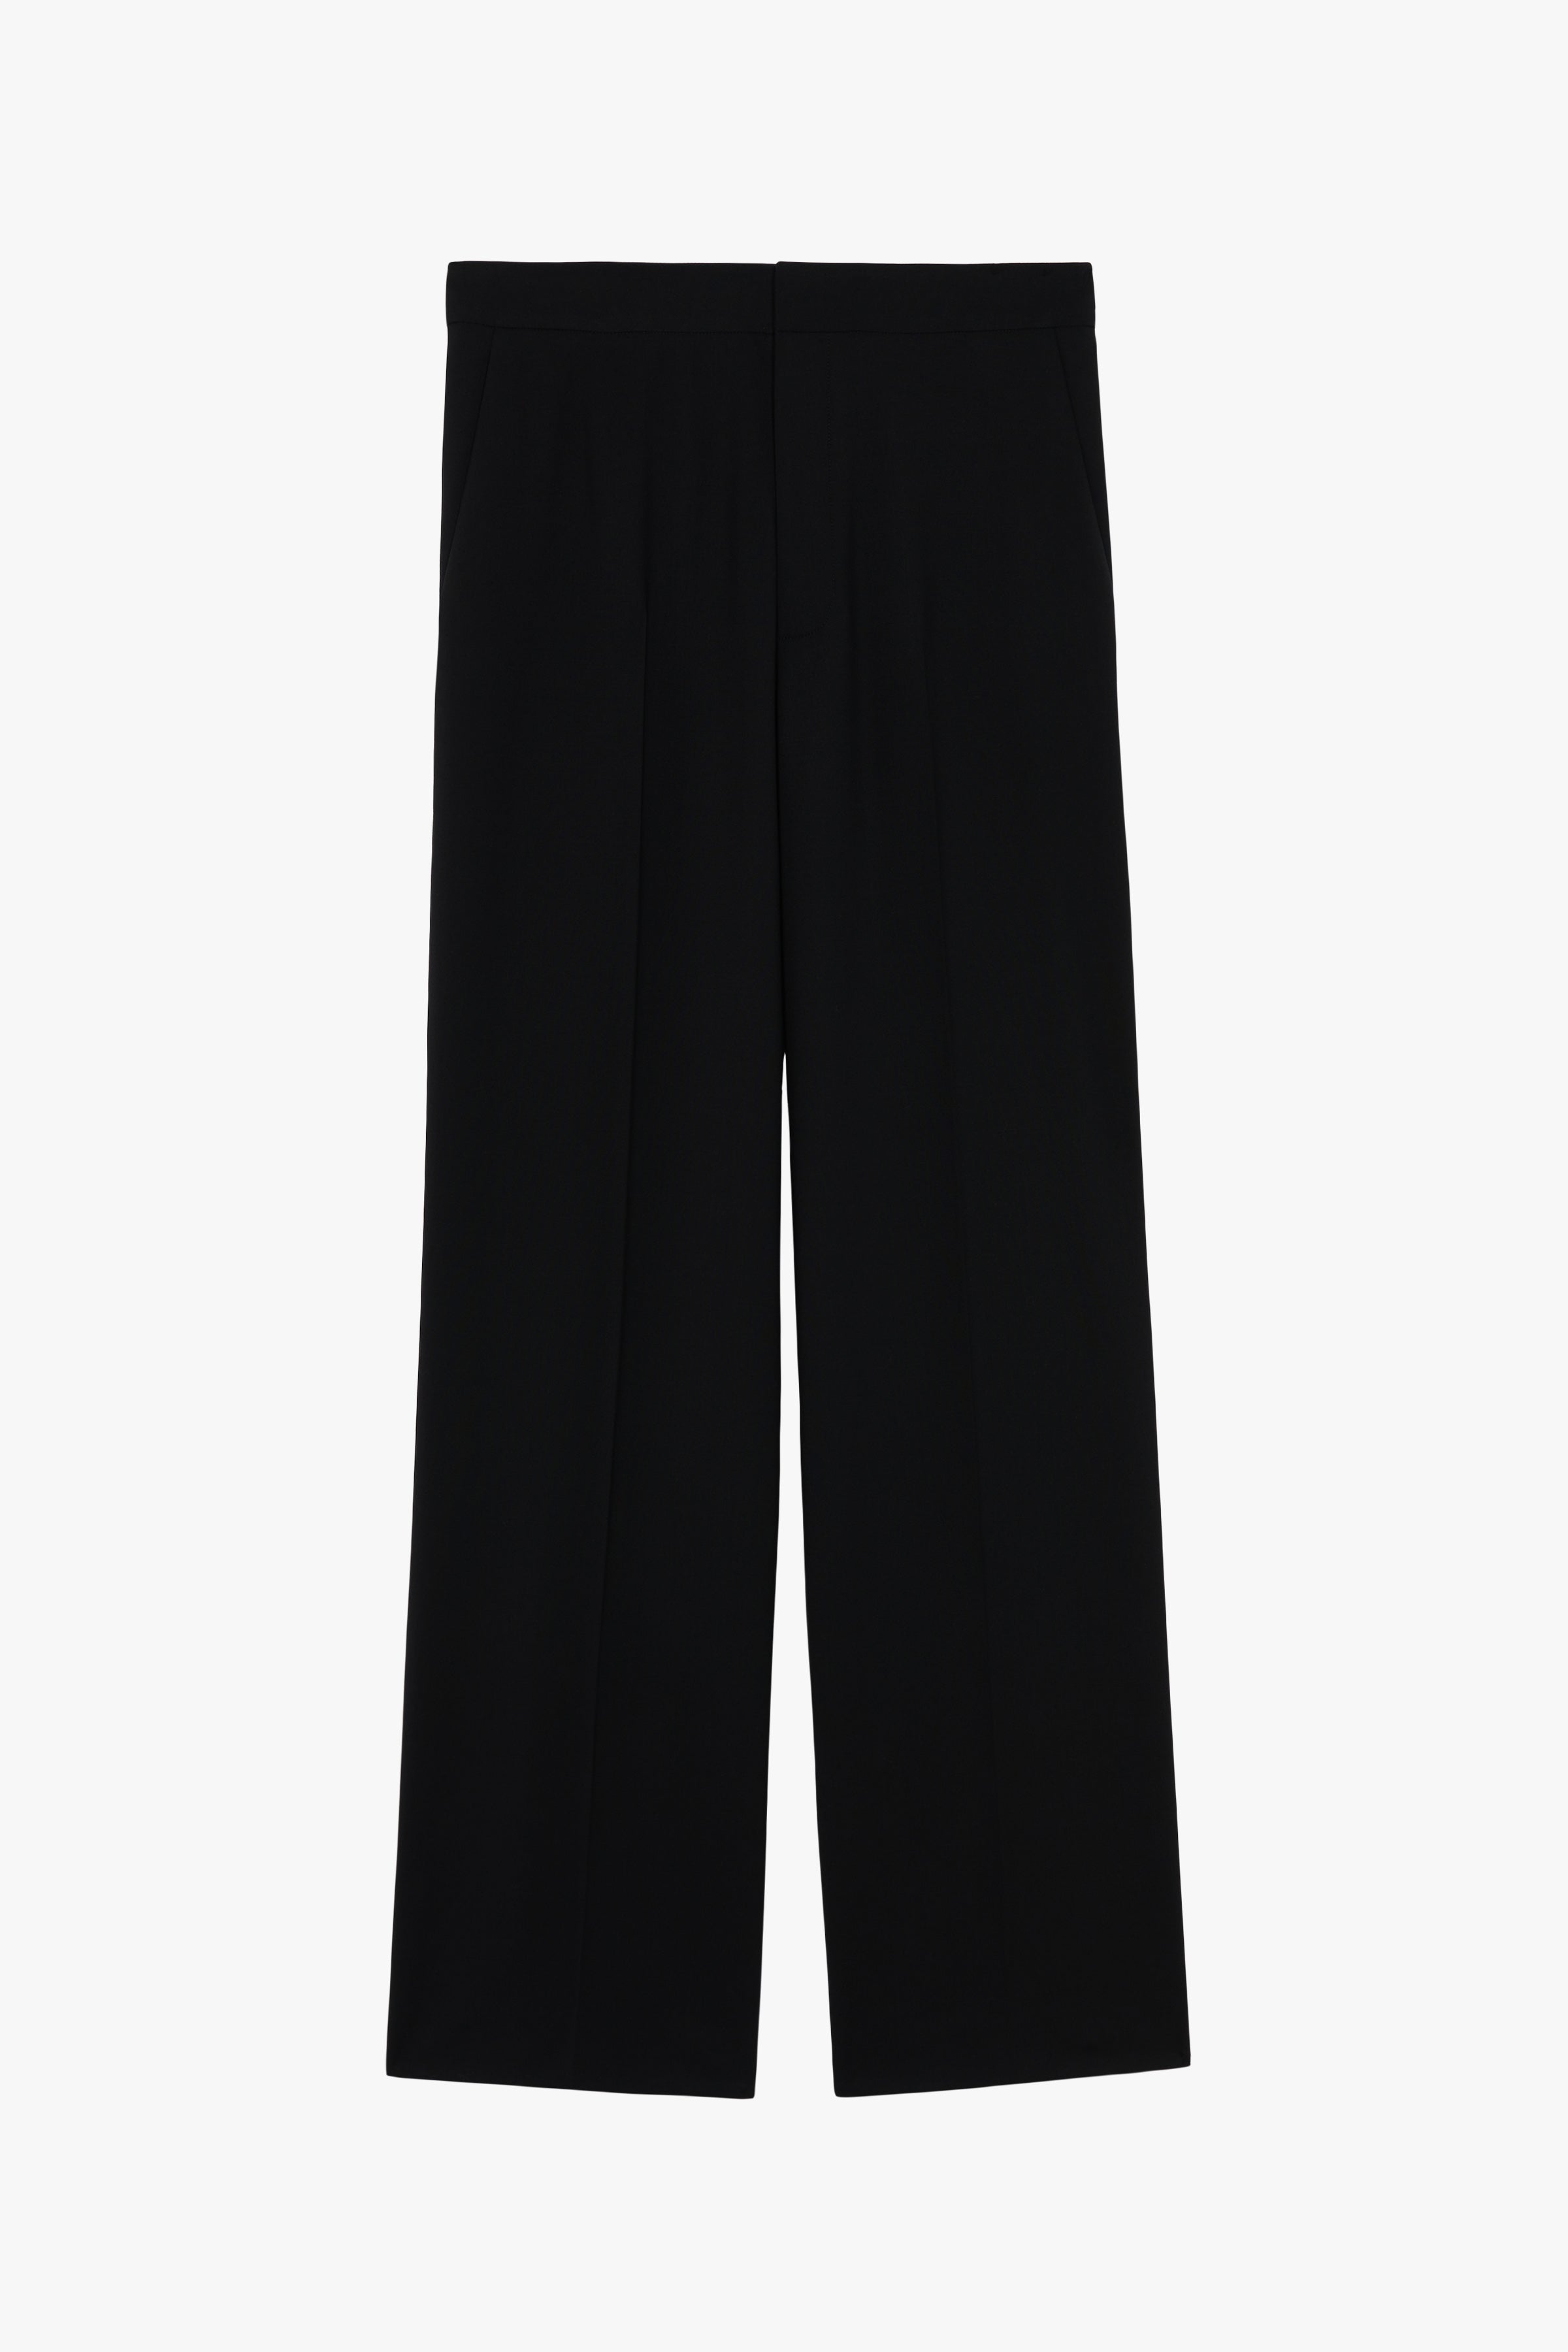 Black Wool Jersey Trousers - GAUCHERE